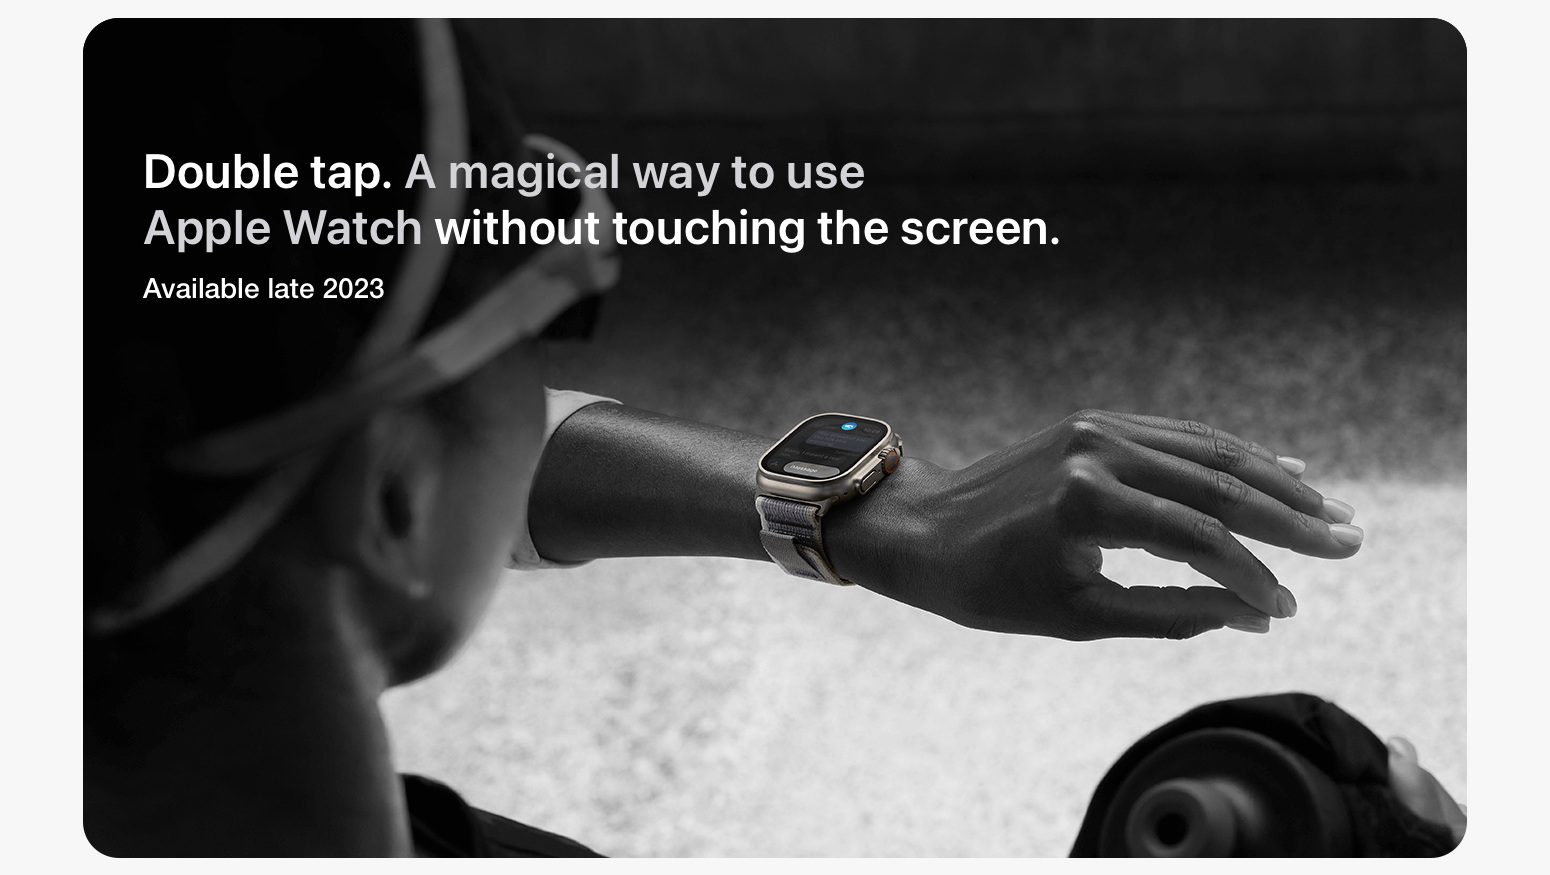 Apple Watch Ultra 2. Next-level adventure.